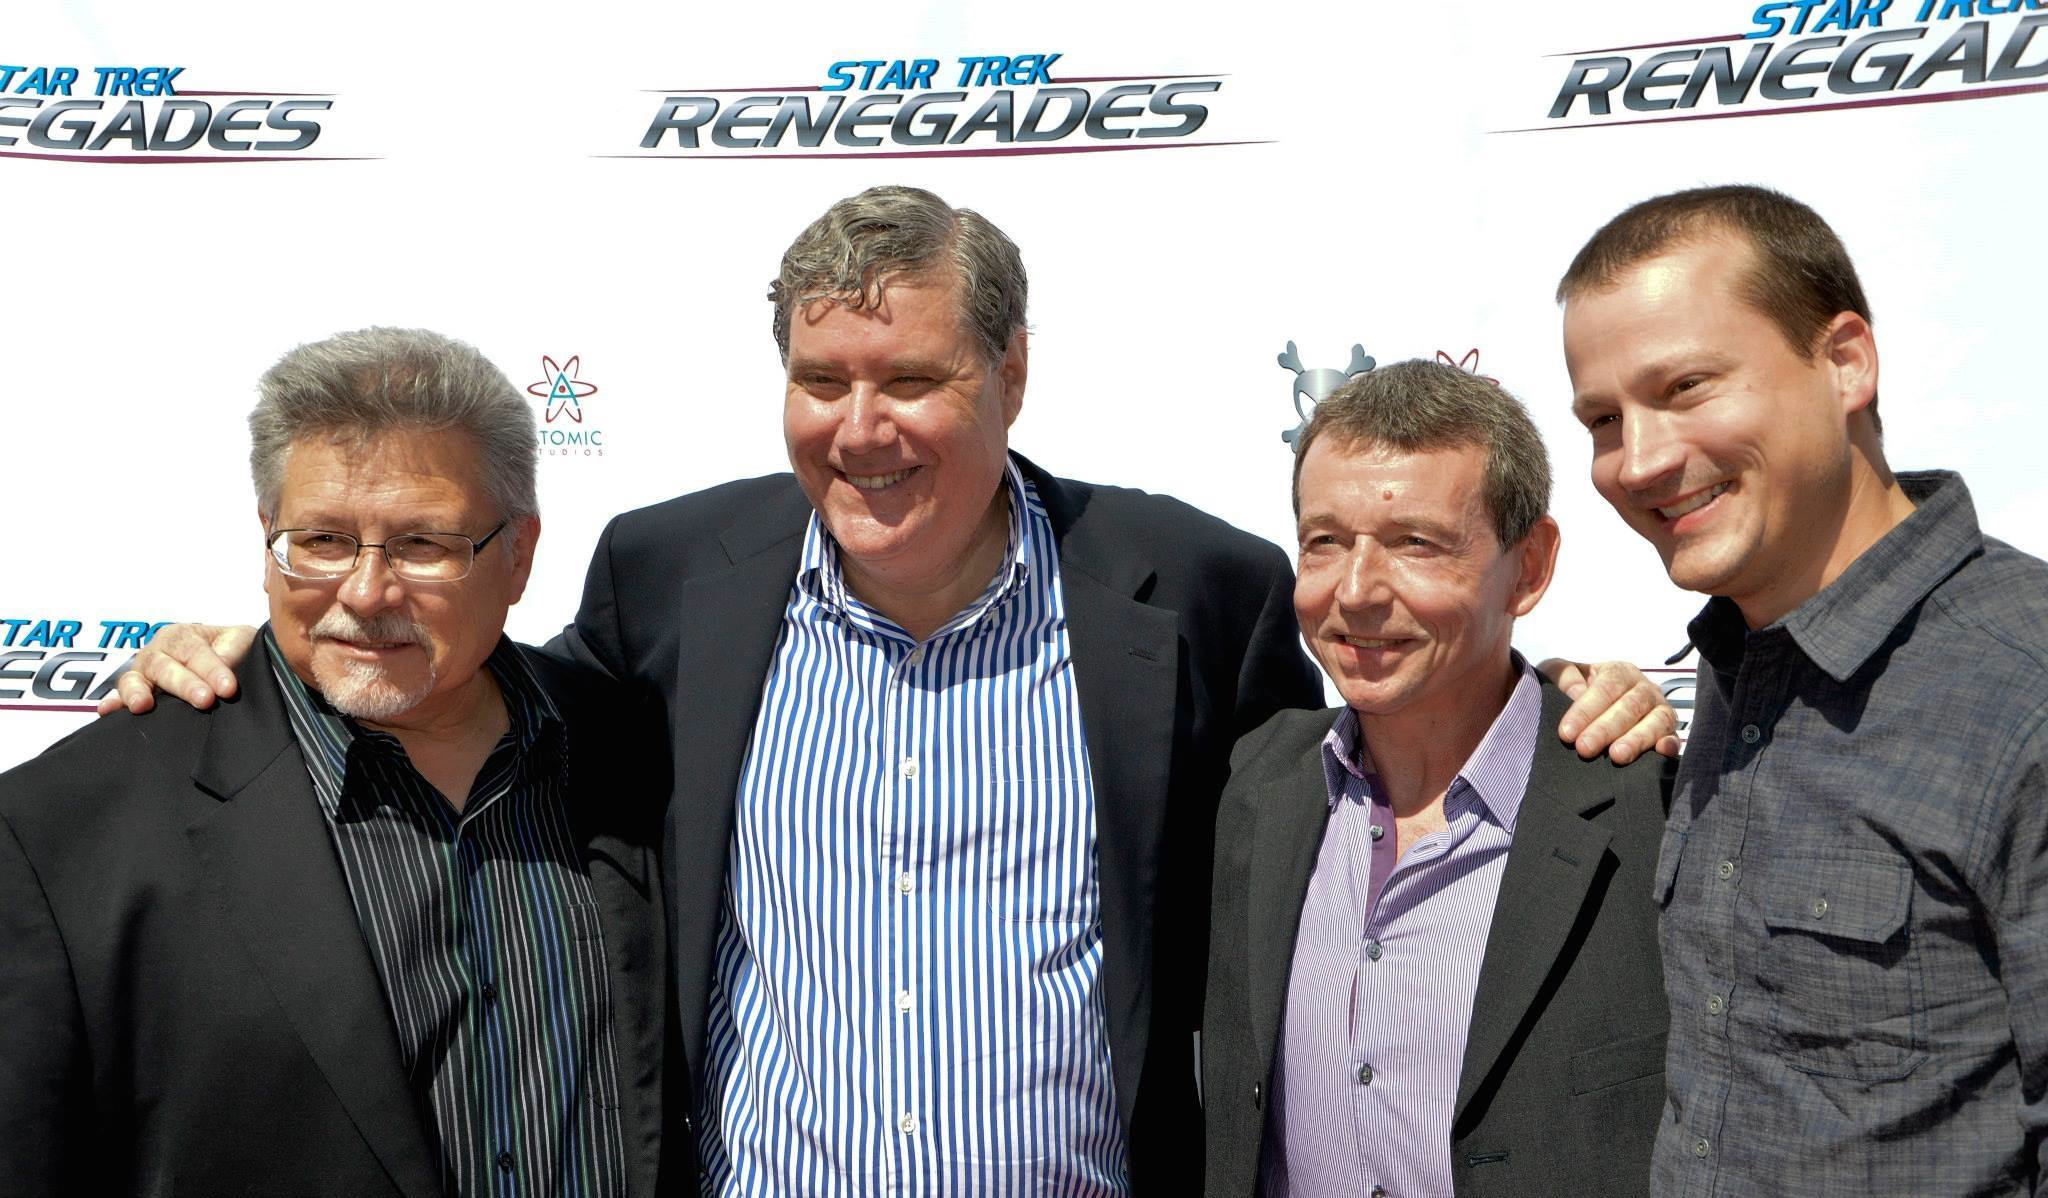 Screenwriter Jack Trevino, Jon Macht, Klingon actor John Carrington, Composer Justin Durbin - Star Trek Renegades Premiere red carpet